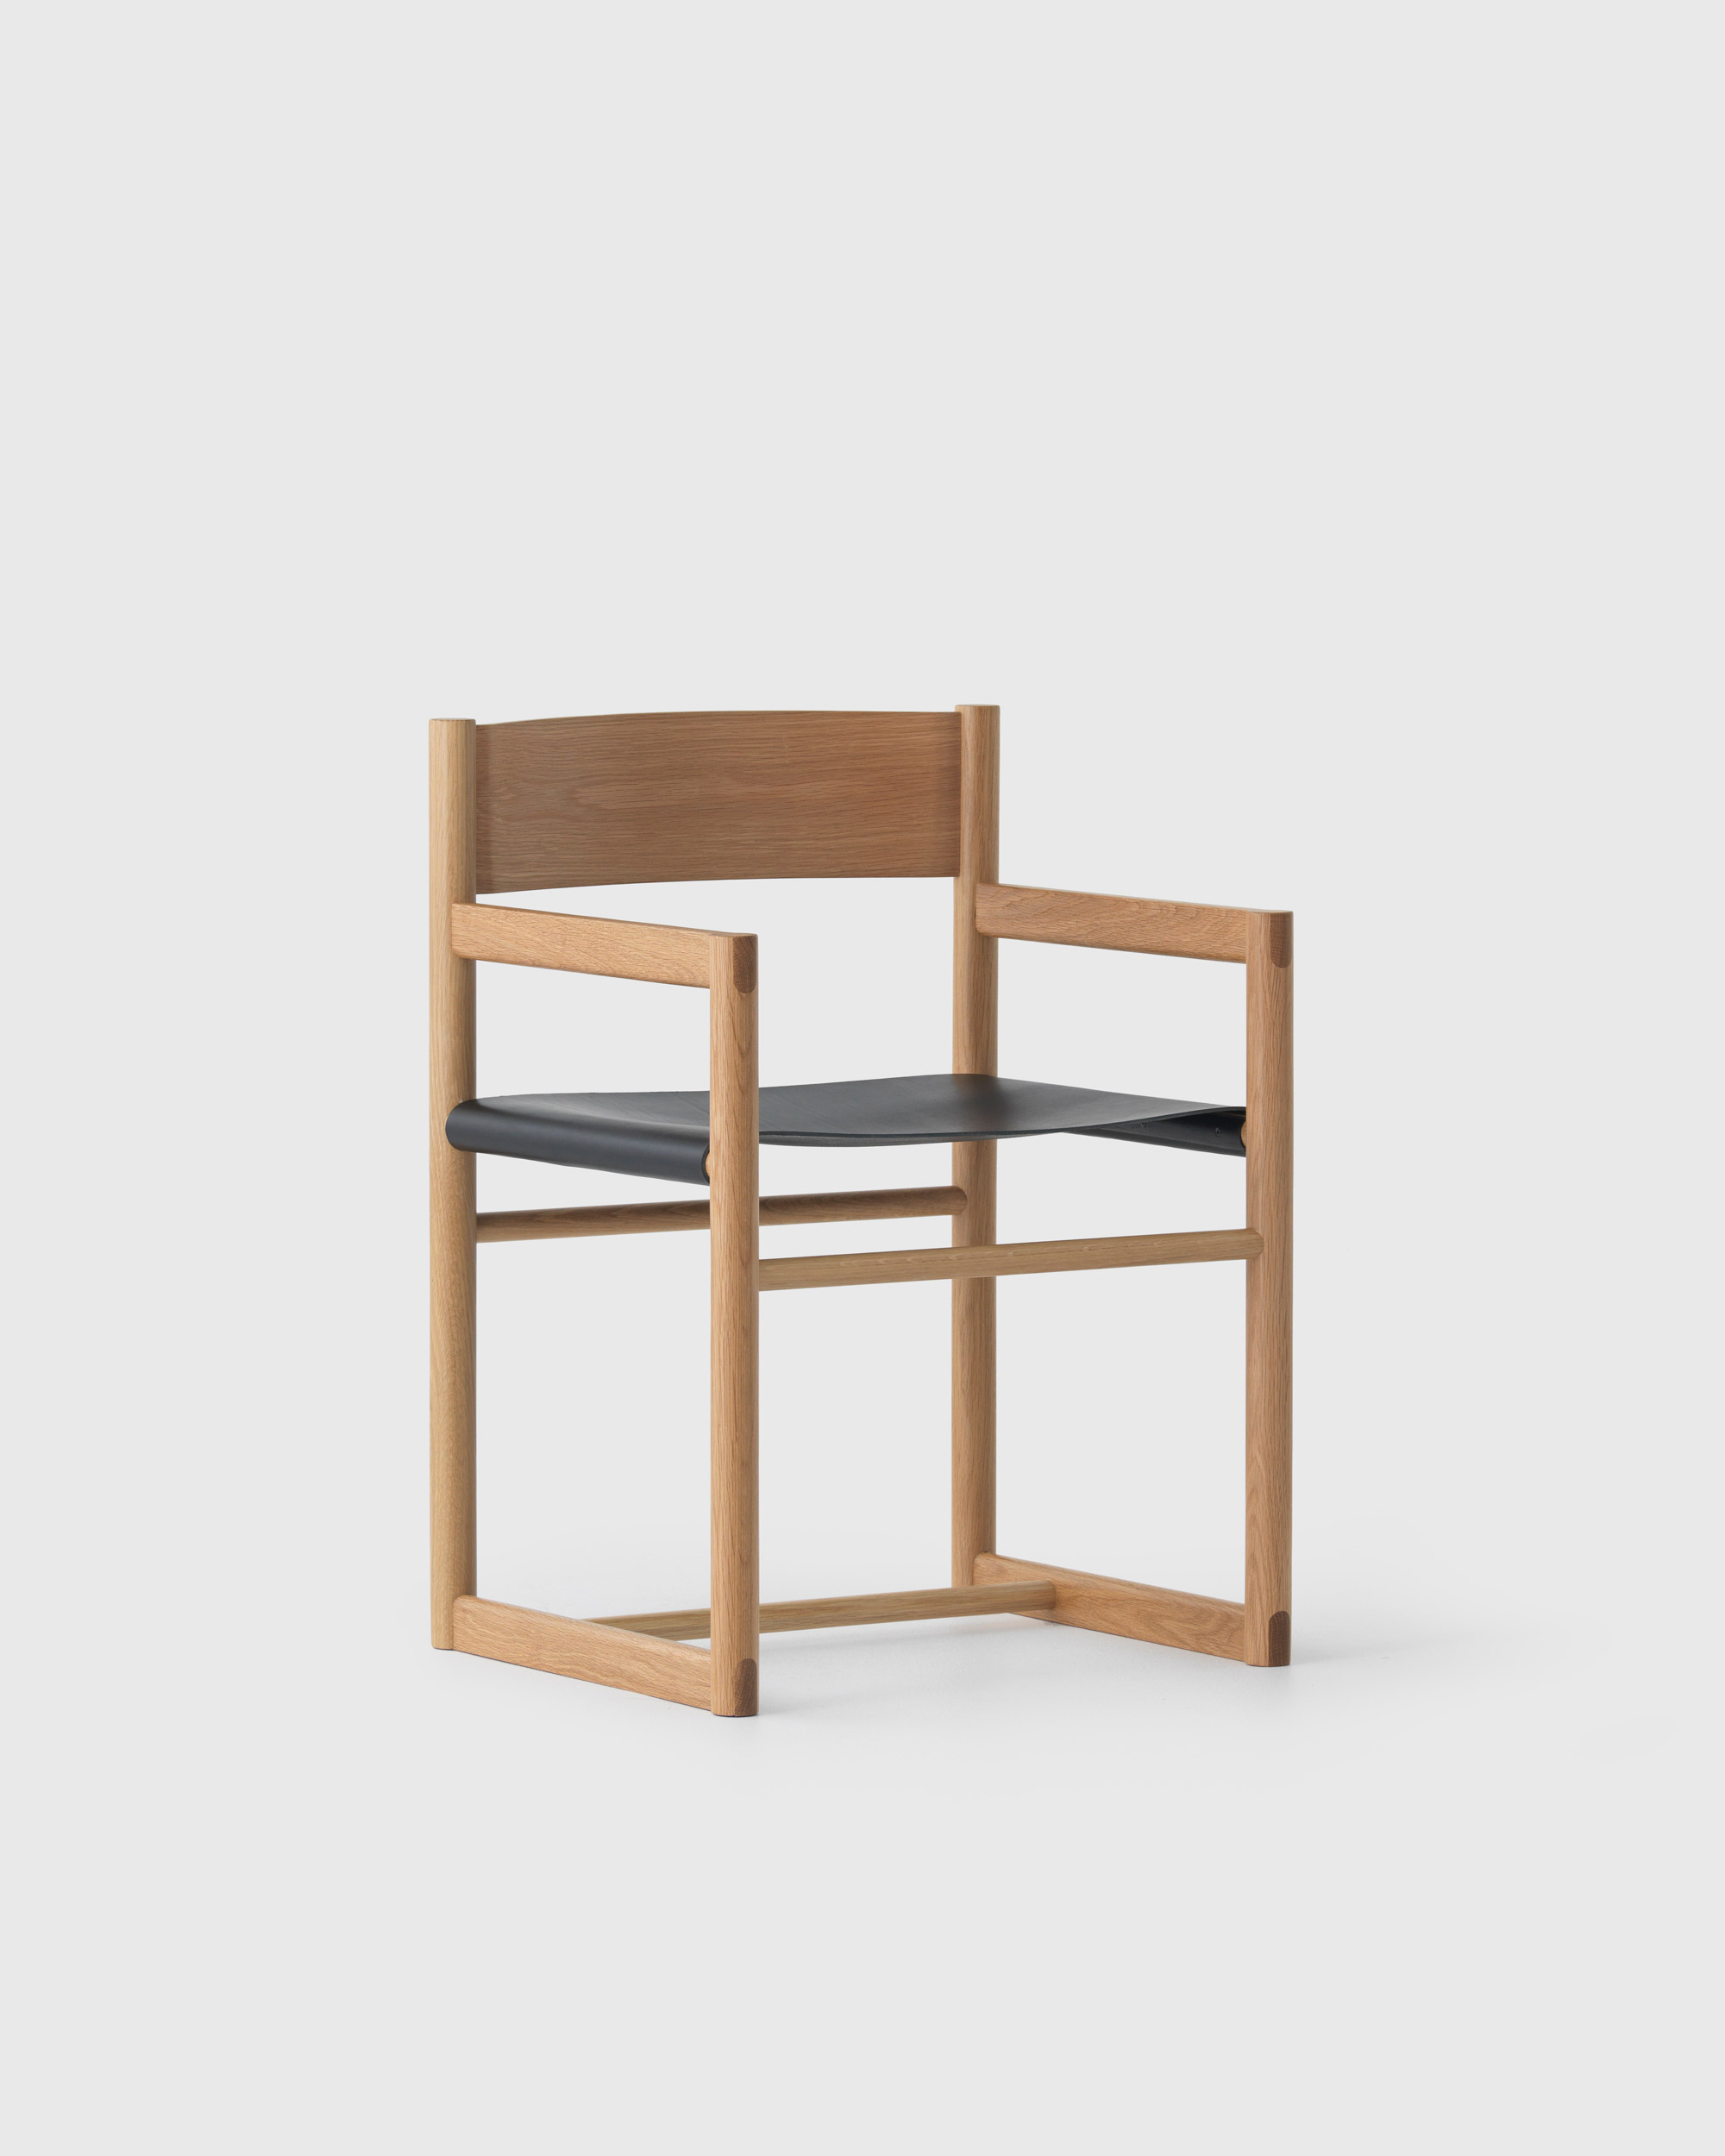 Minimalist Chair designed by Simon James